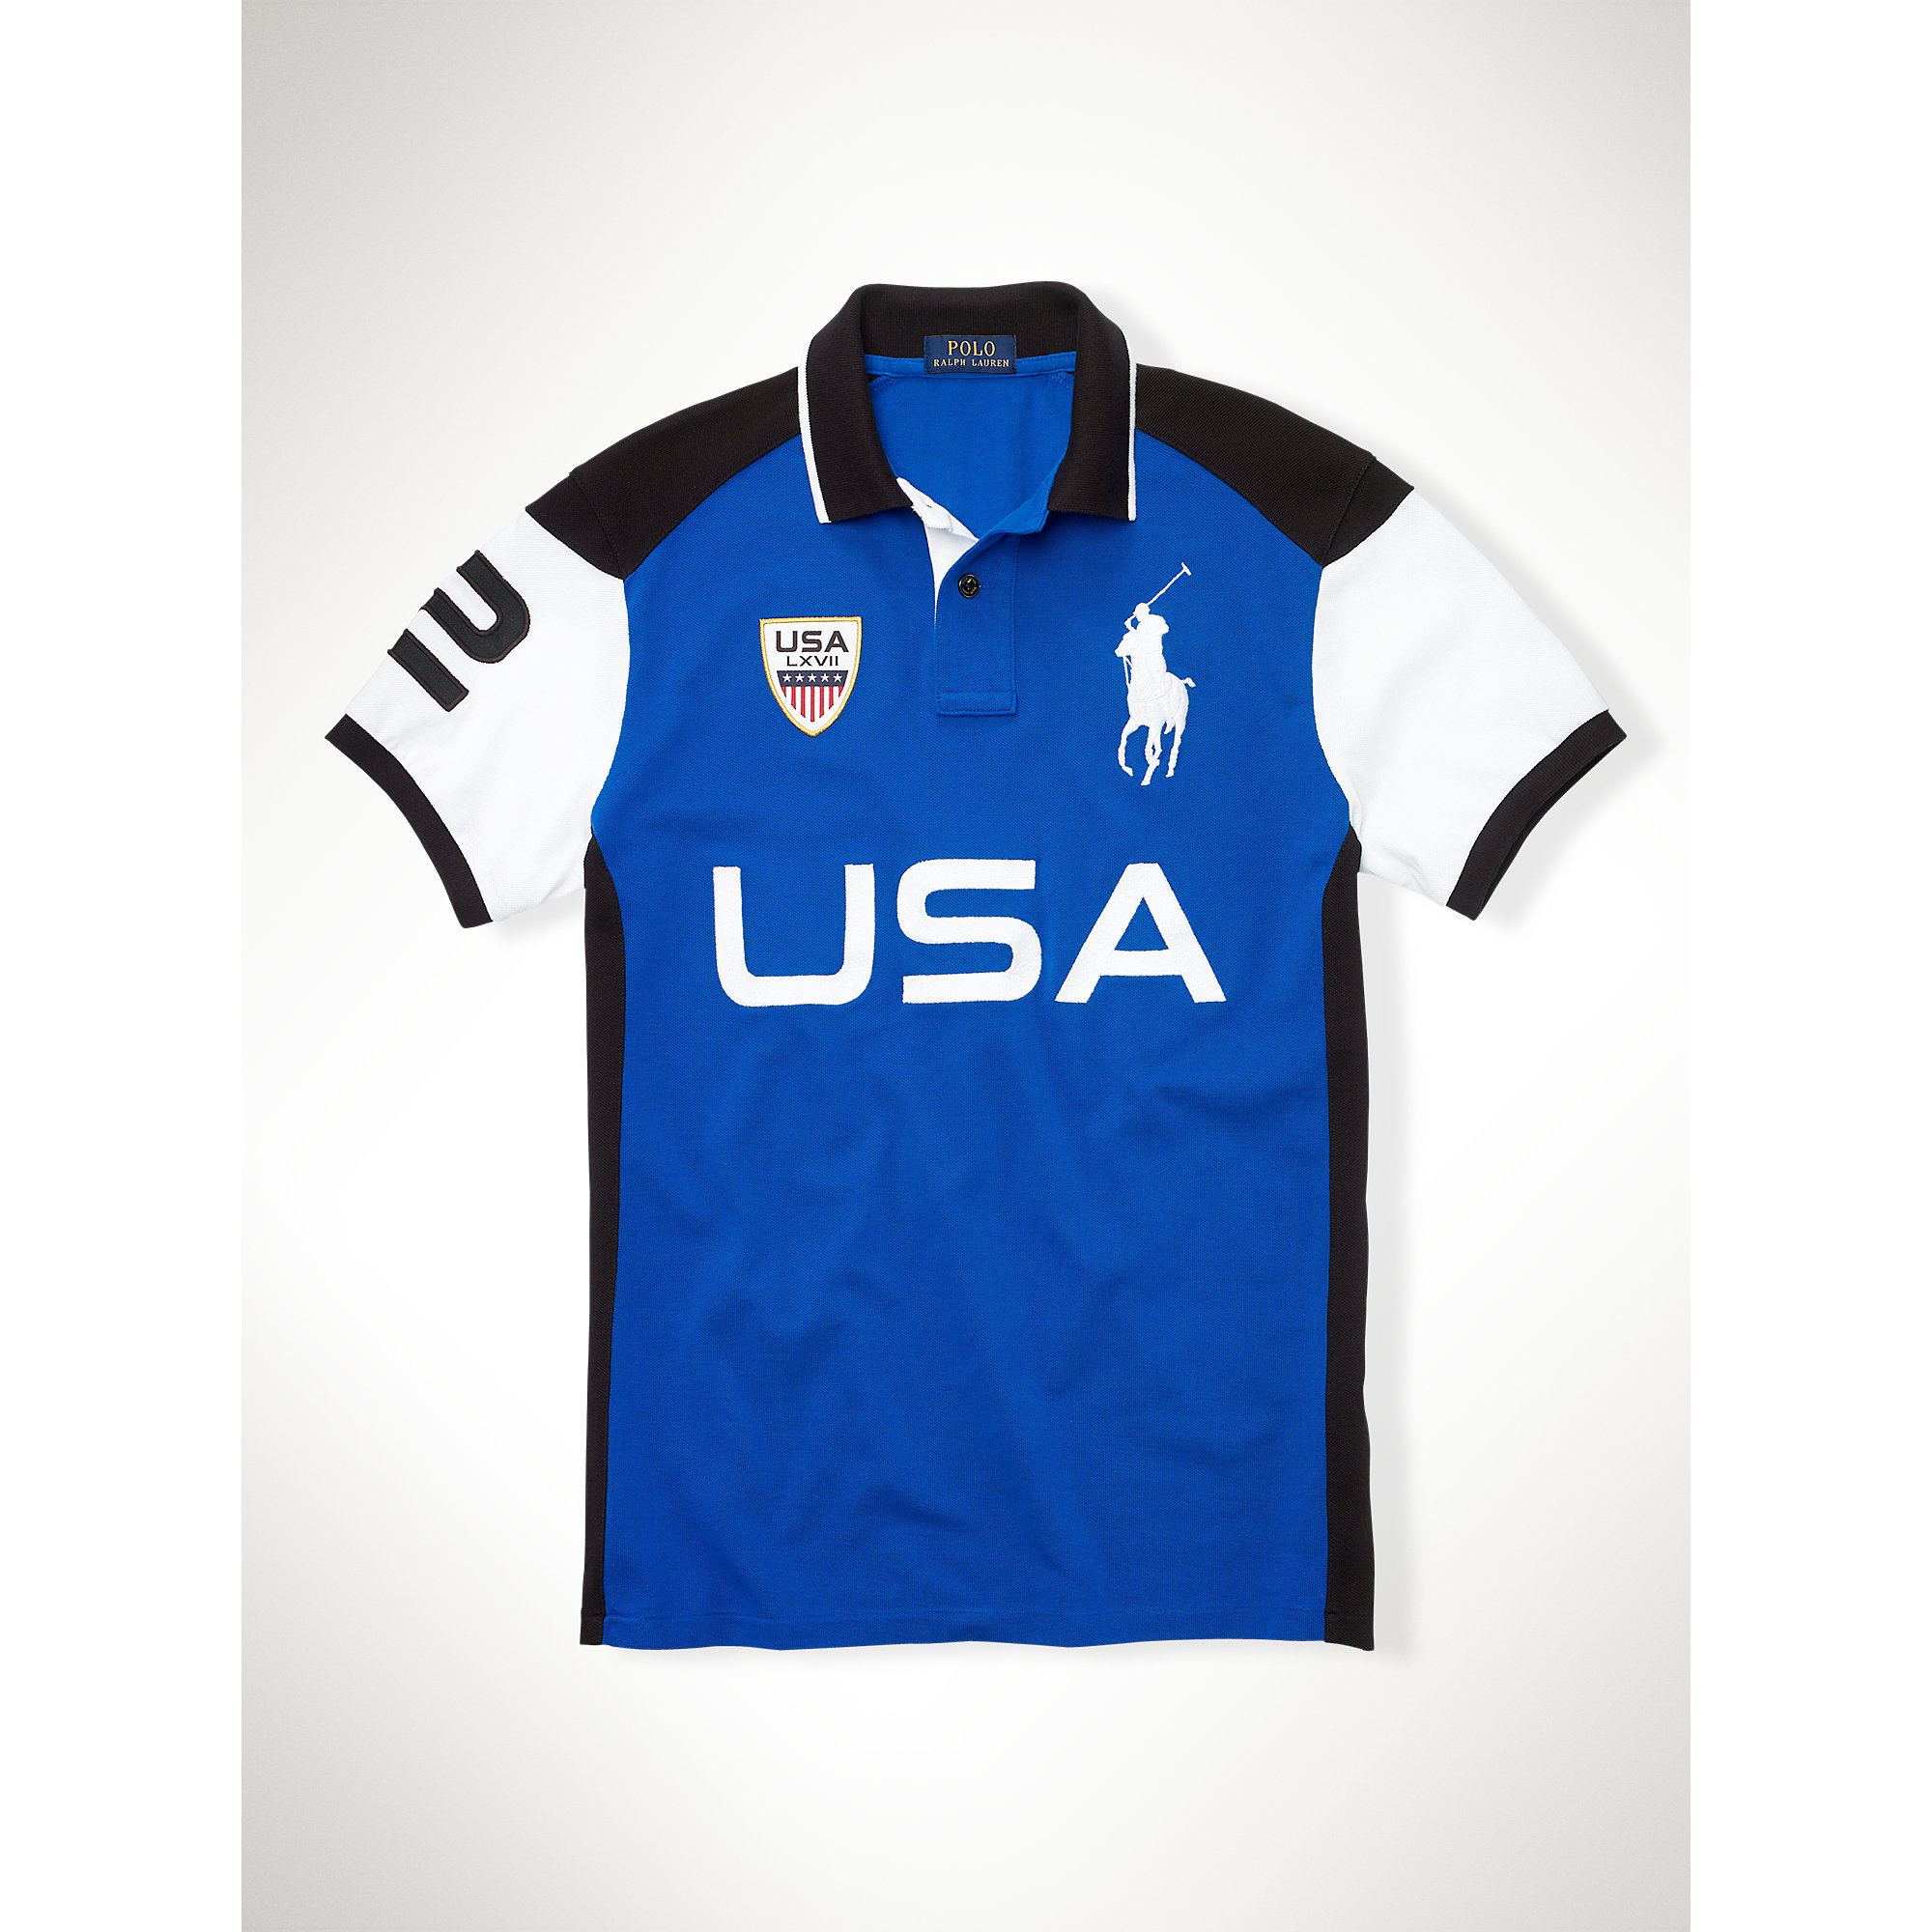 Polo Ralph Lauren Custom-Fit "Usa" Polo Shirt in Blue for Men - Lyst